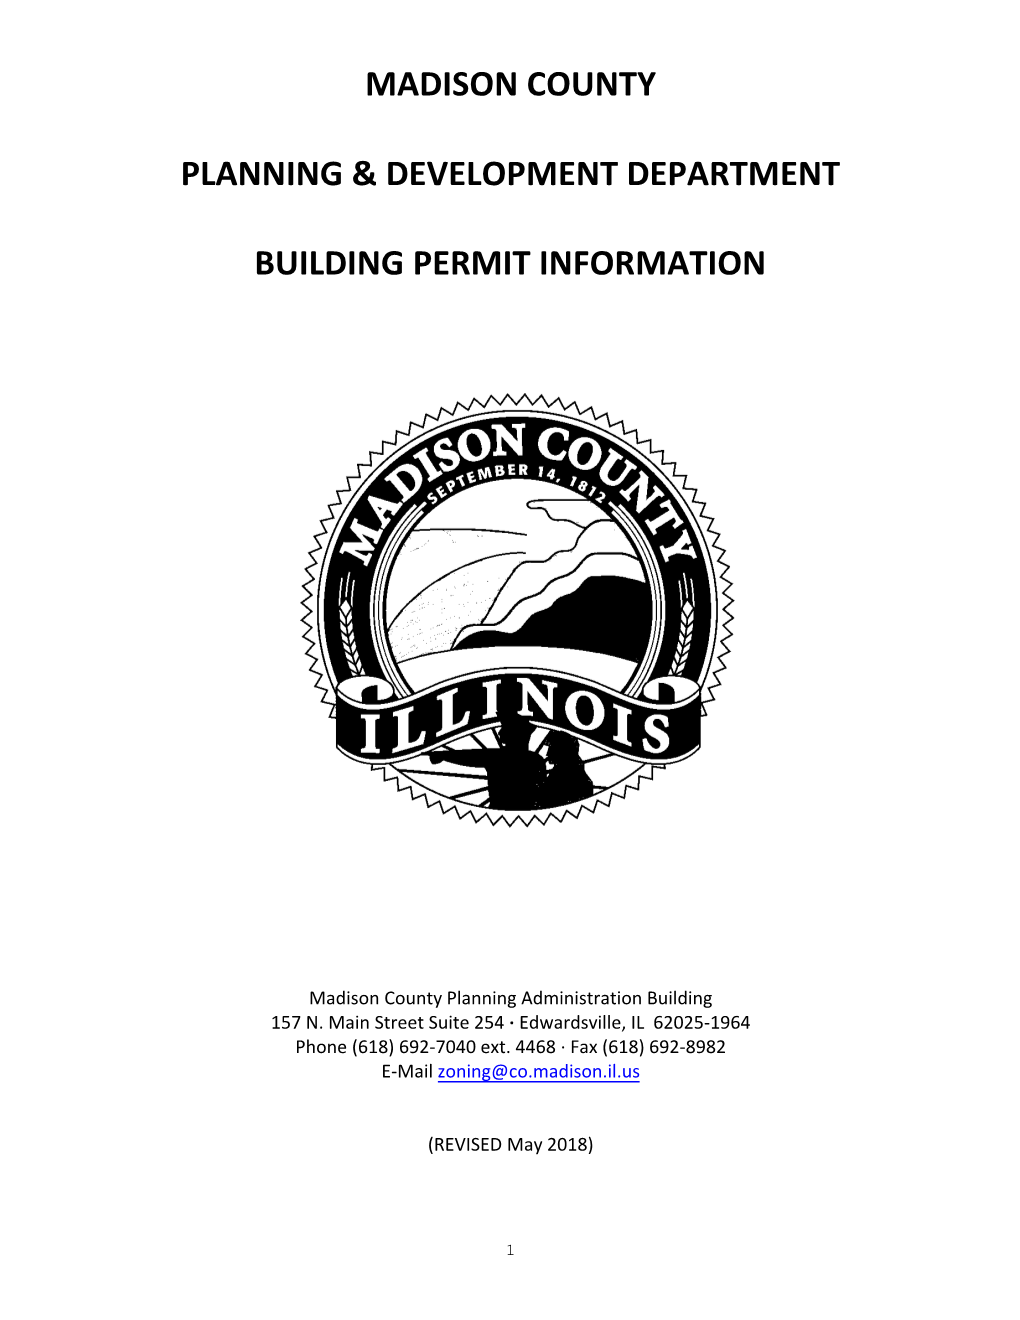 Madison County Planning & Development Department